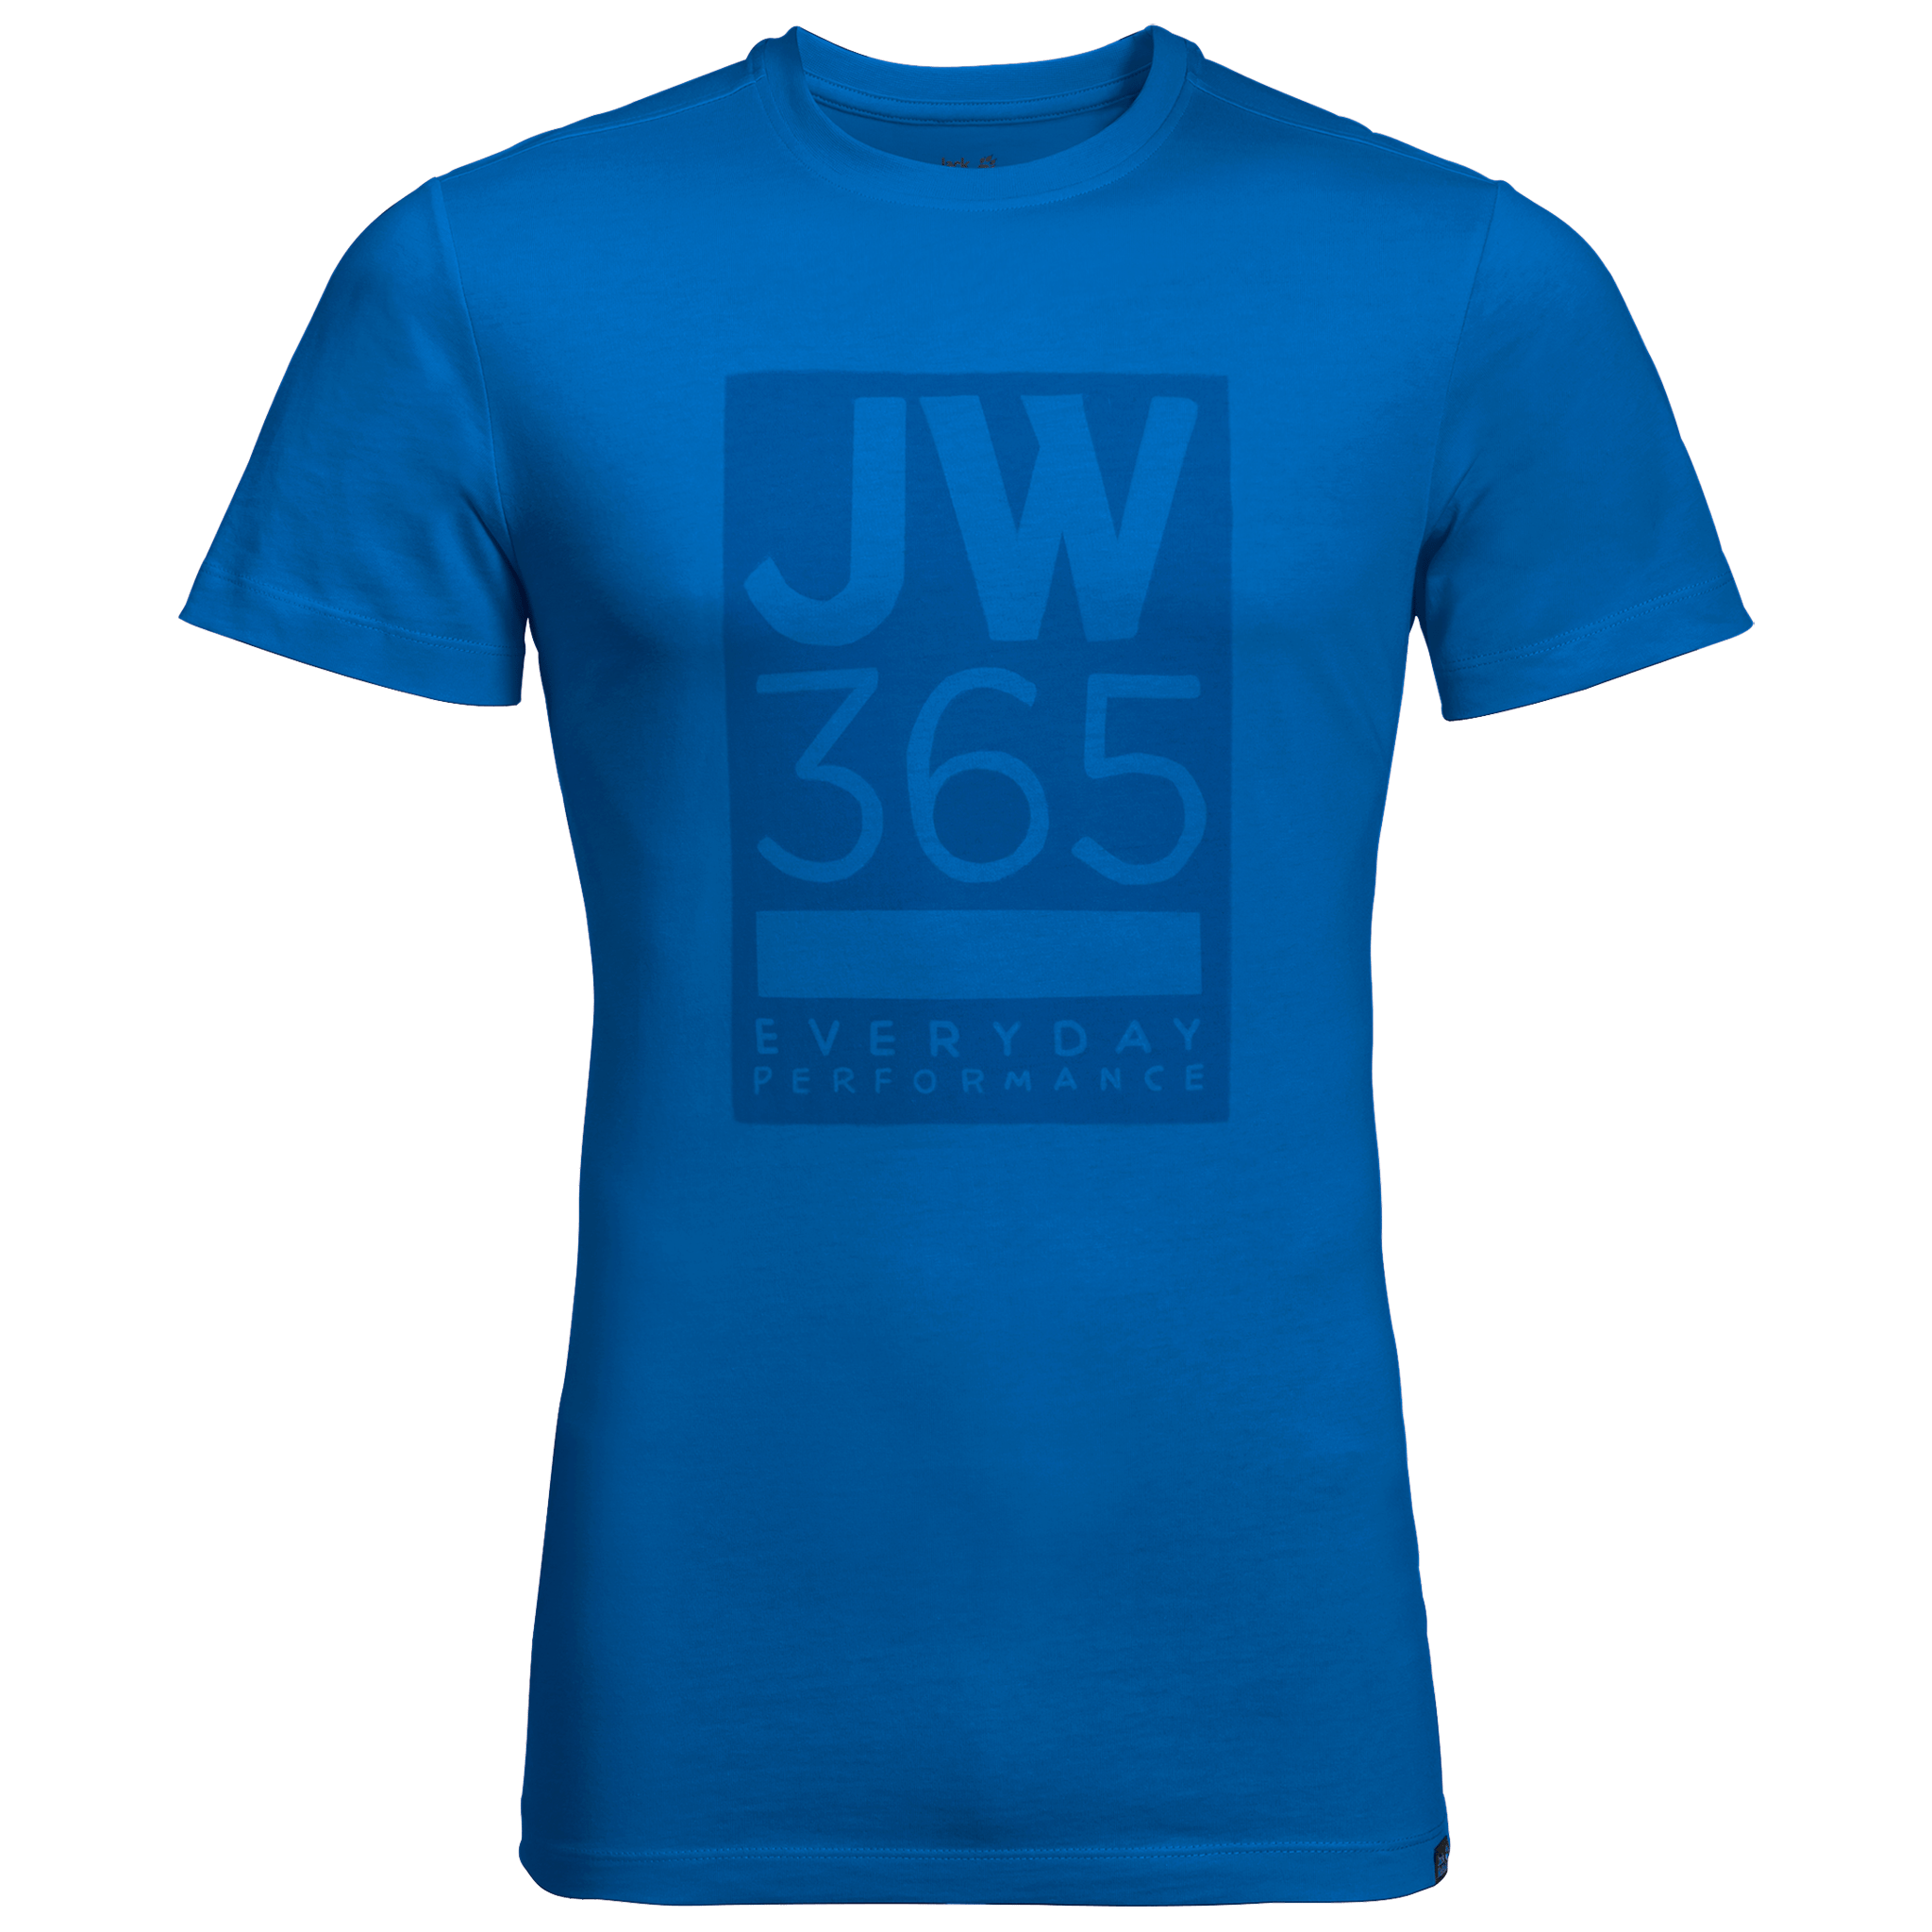 Azure Blue Organic Cotton T-Shirt